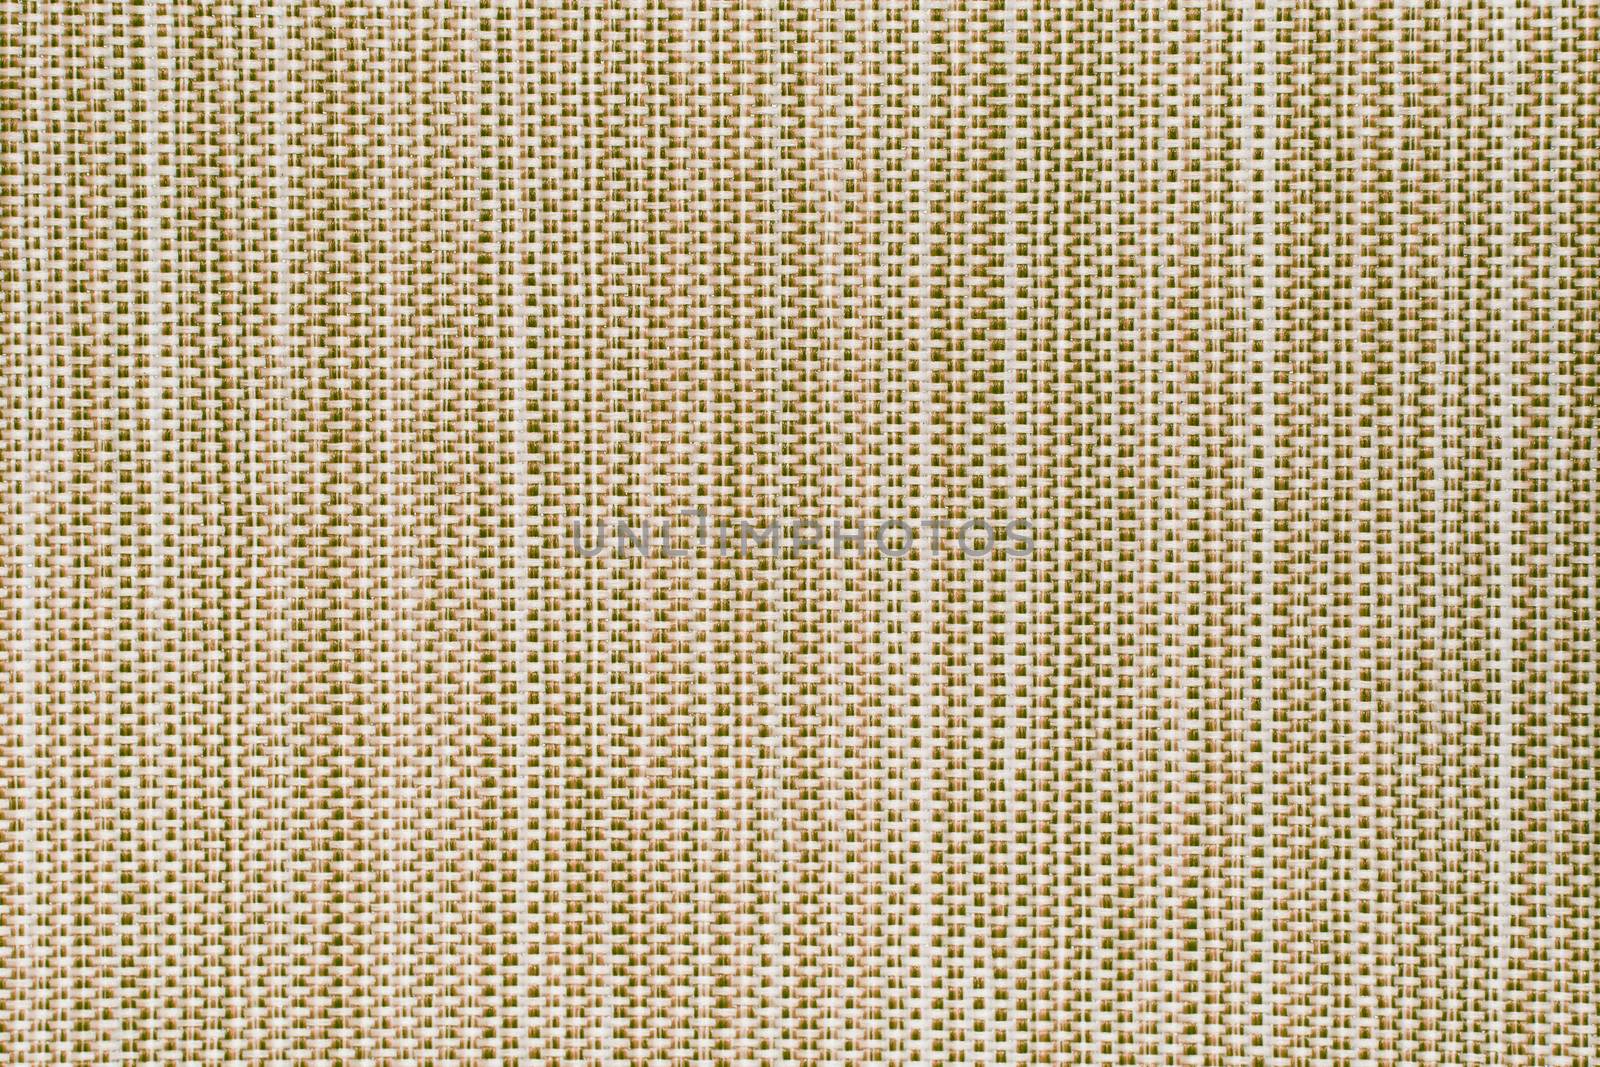 Beige Fiberglass mat texture background can use for vertical curtain